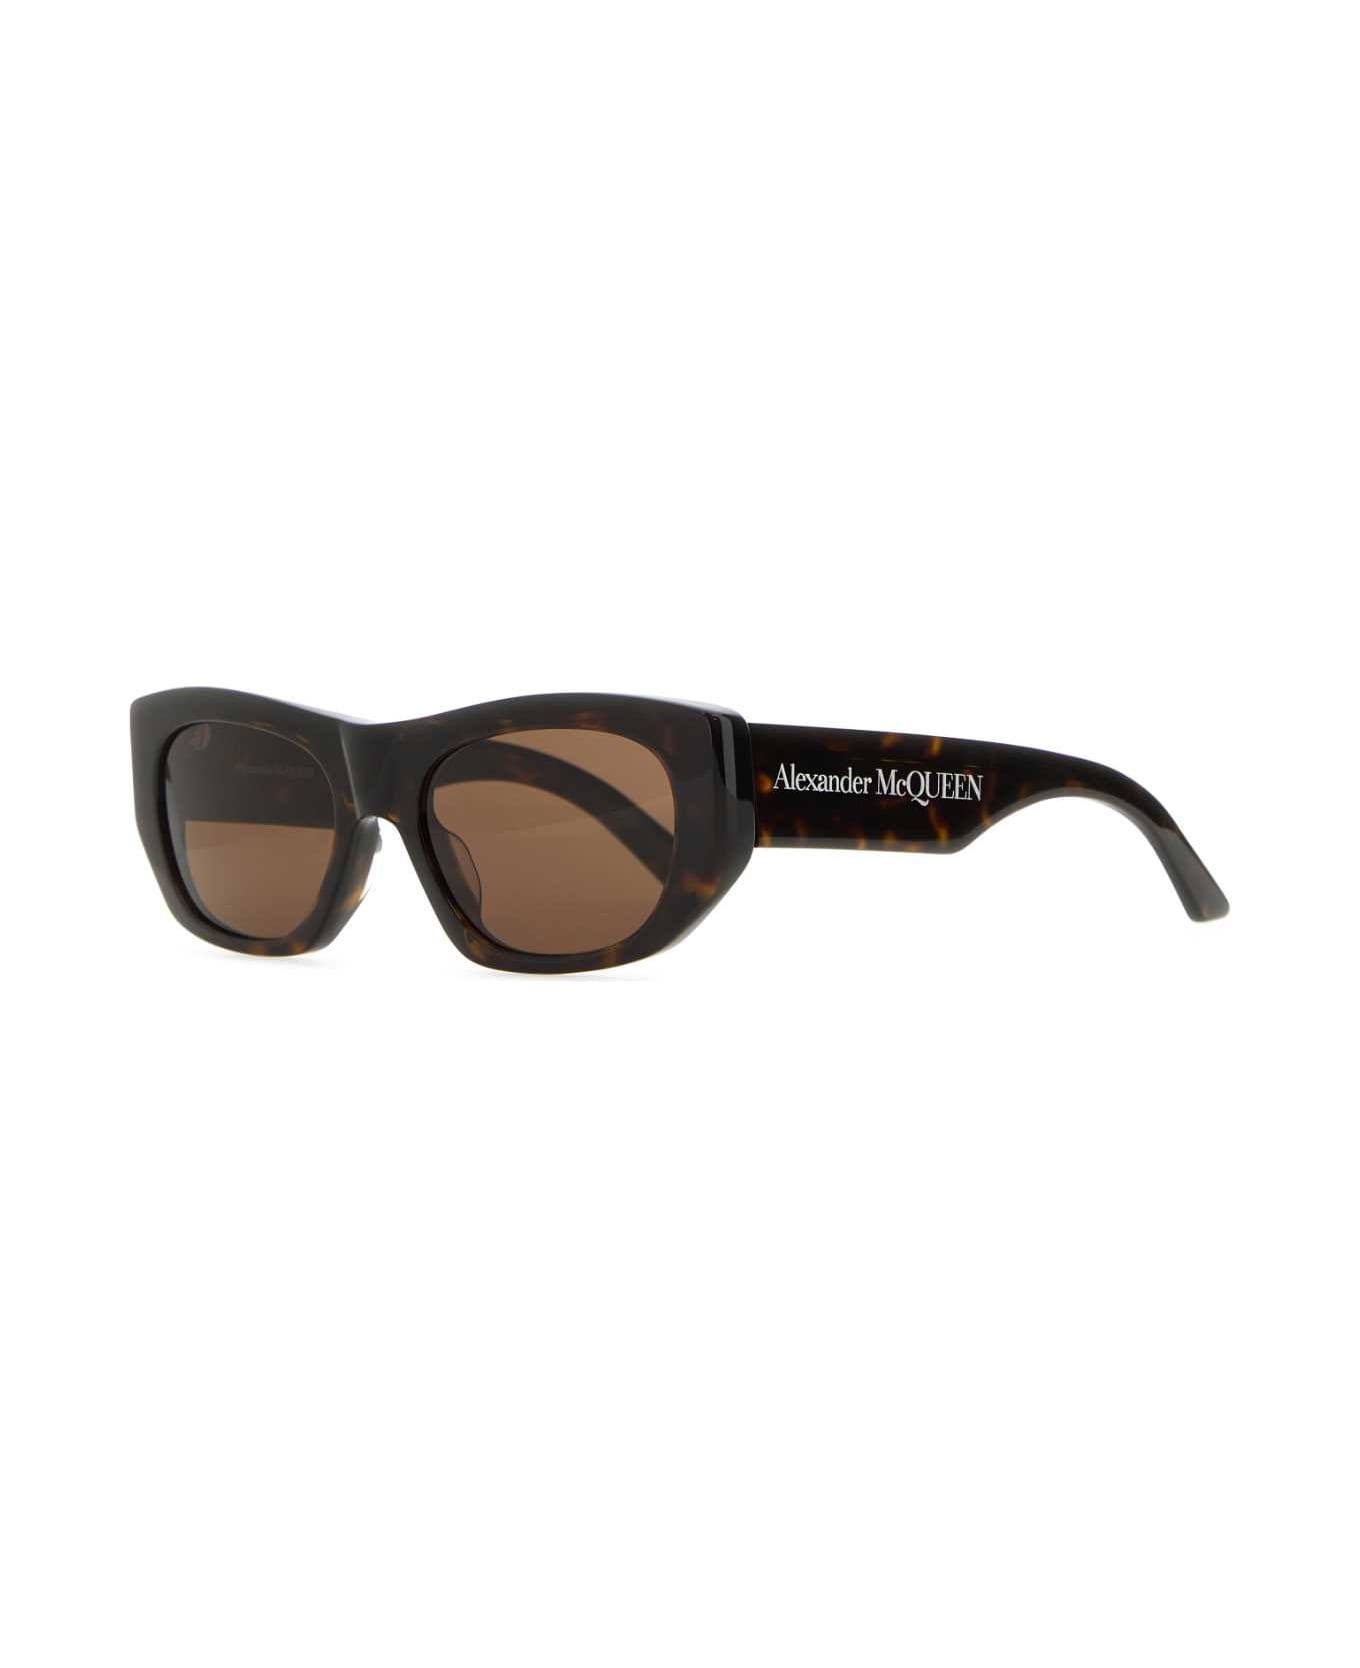 Alexander McQueen Printed Acetate Punk Rivet Sunglasses - SOLIDBROWN サングラス